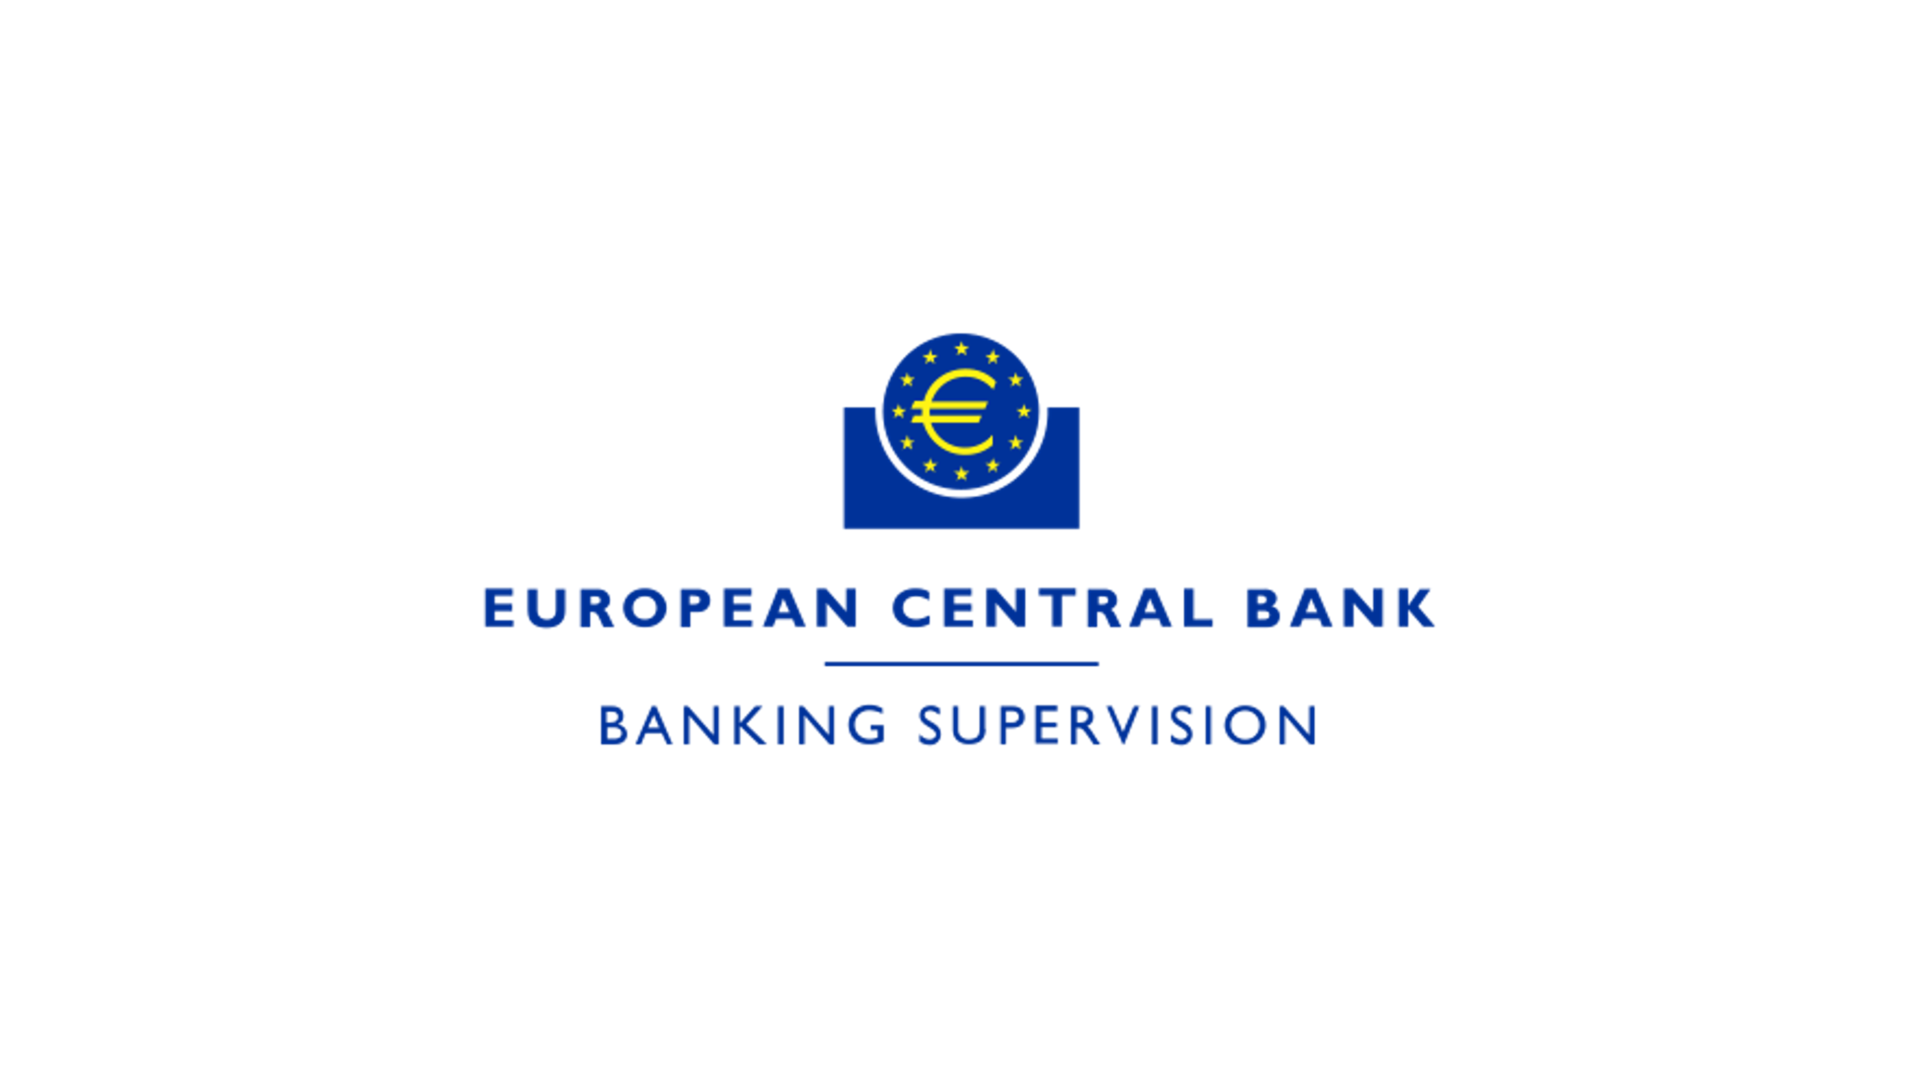 European Central Bank Supervision